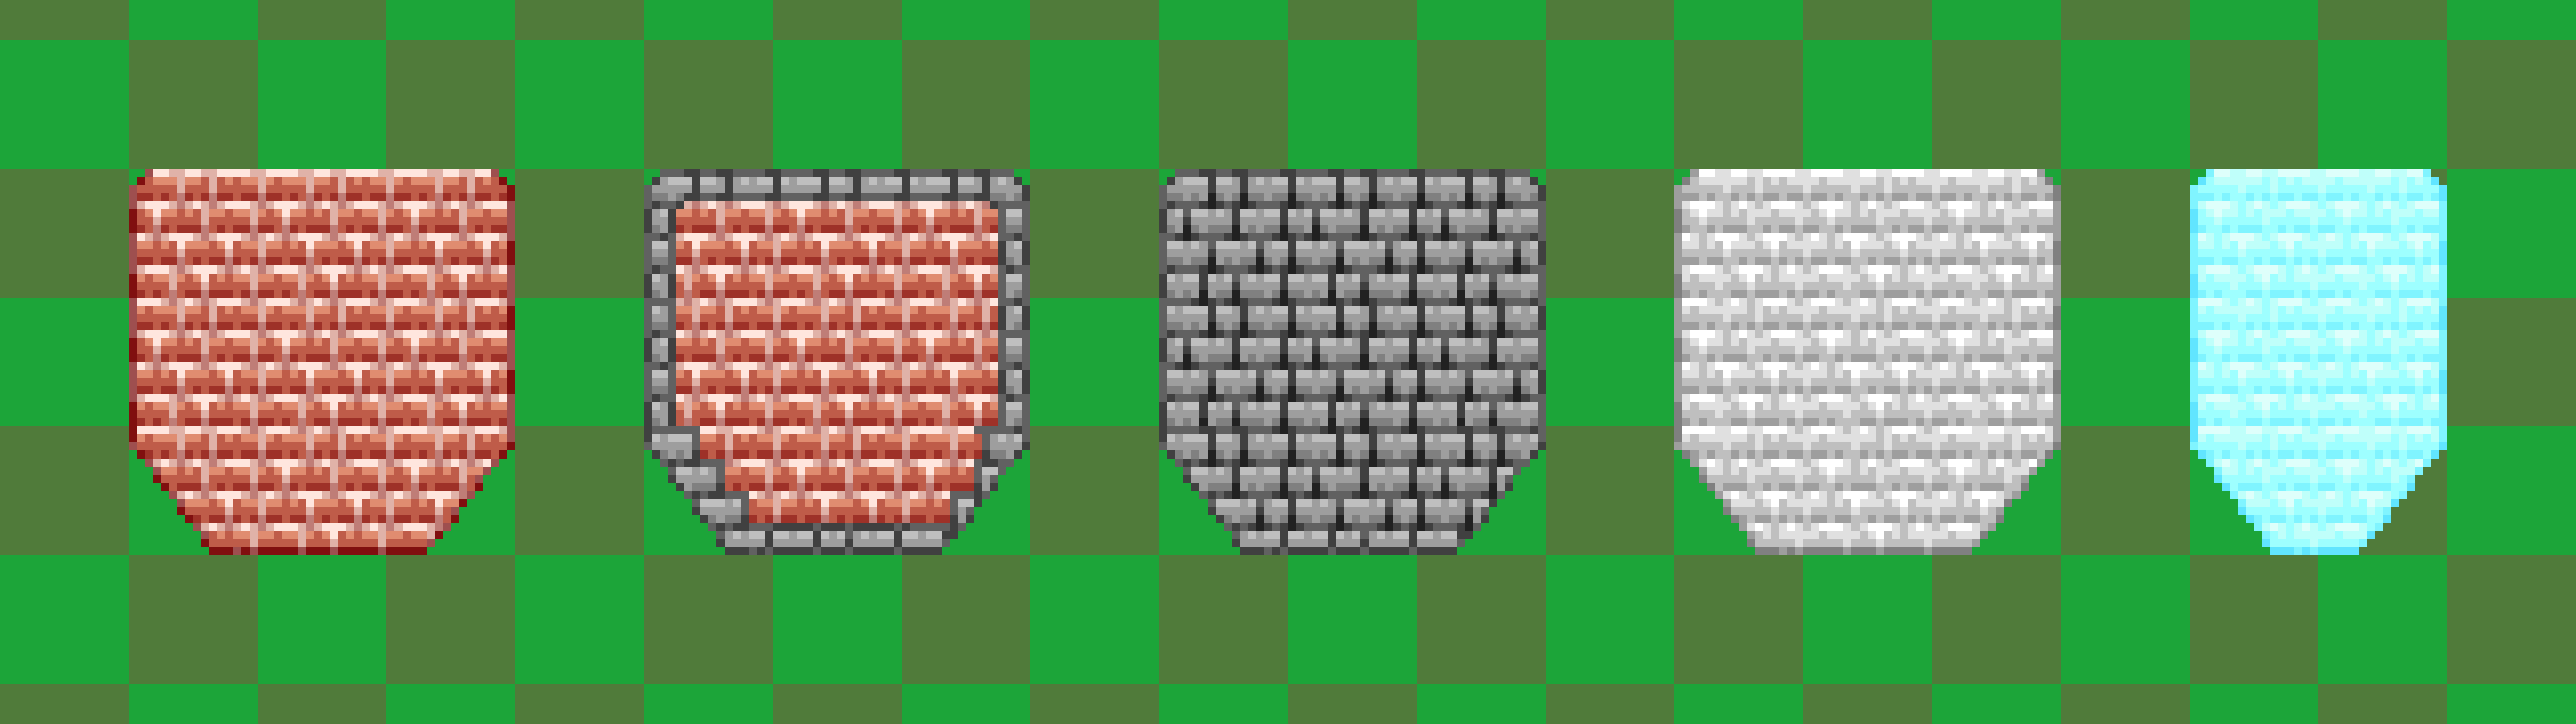 16x16 Pixel Brick Tileset